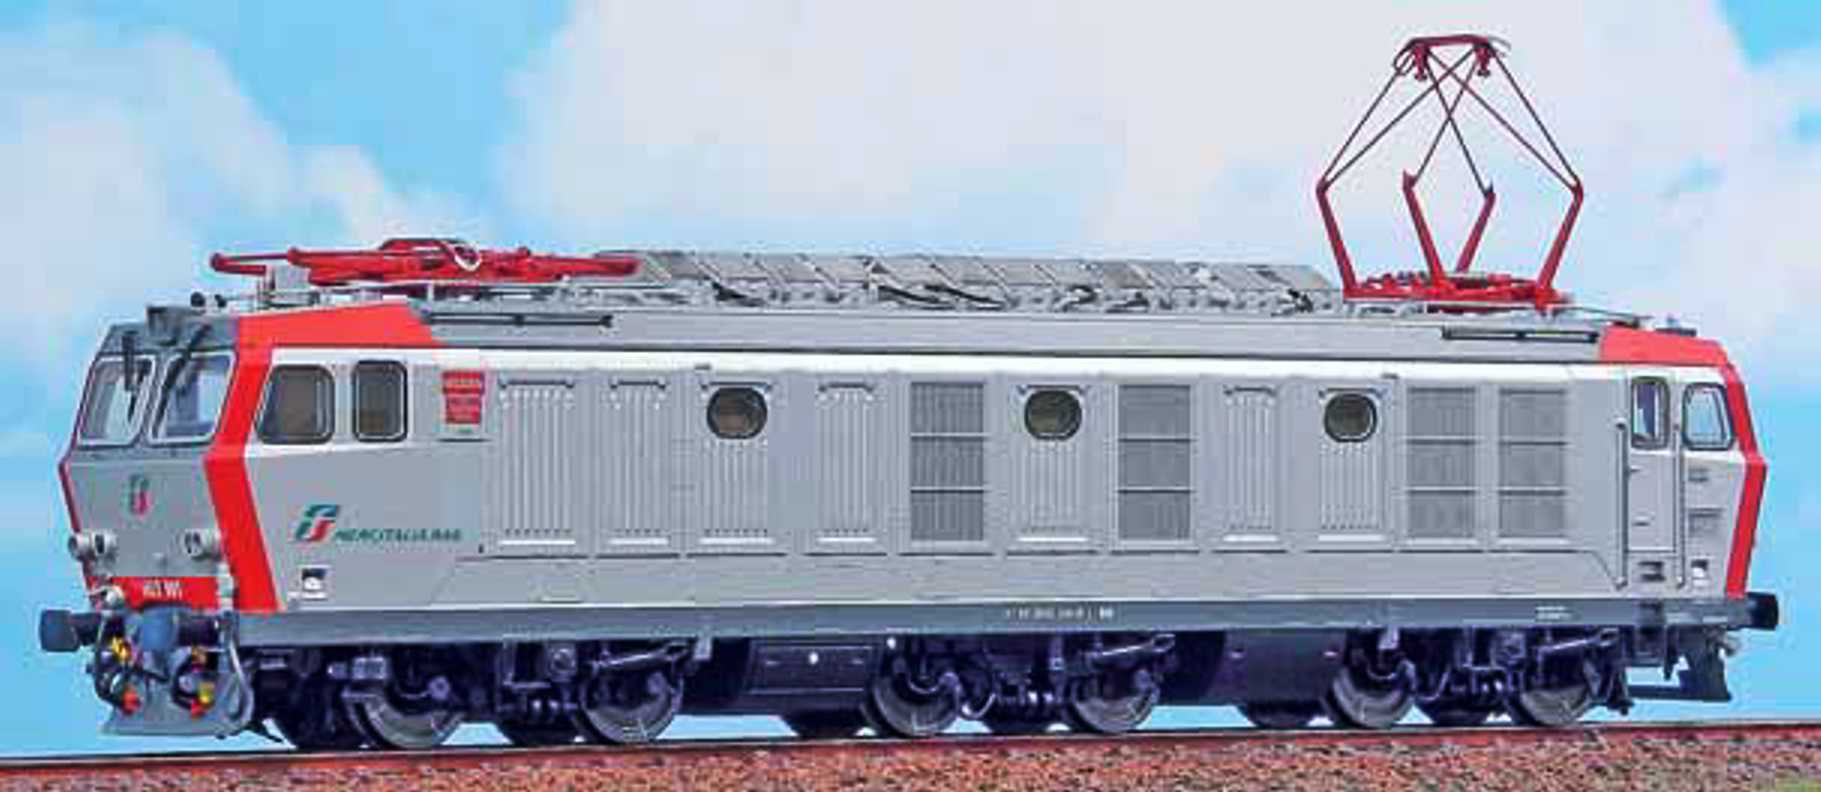 【大得価新作】アクメ ACME 60431 locomotiva E 636 080 Epoca V A.C.M.E HOゲージ 鉄道模型 海外 列車 電車 車両 中古 良好 M6514562 JR、国鉄車輌